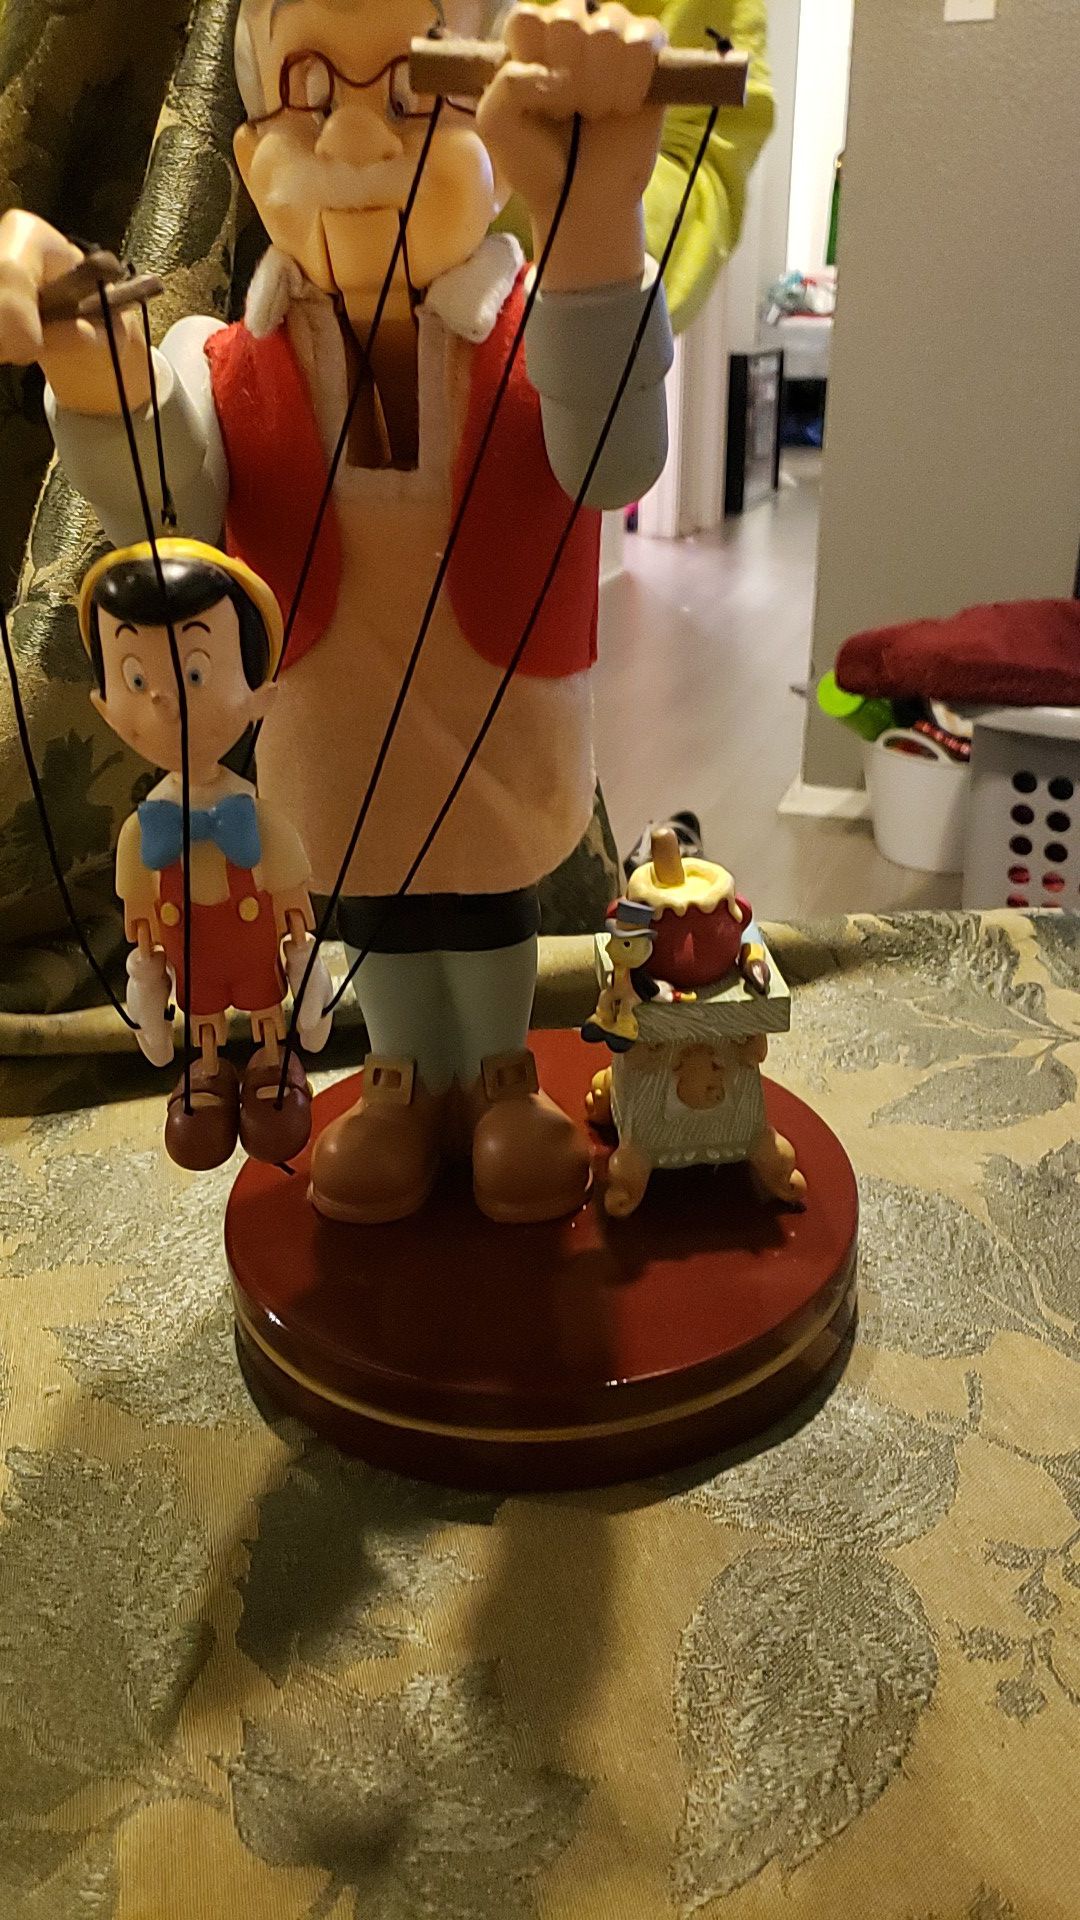 Disney Geppetto and Pinocchio statue